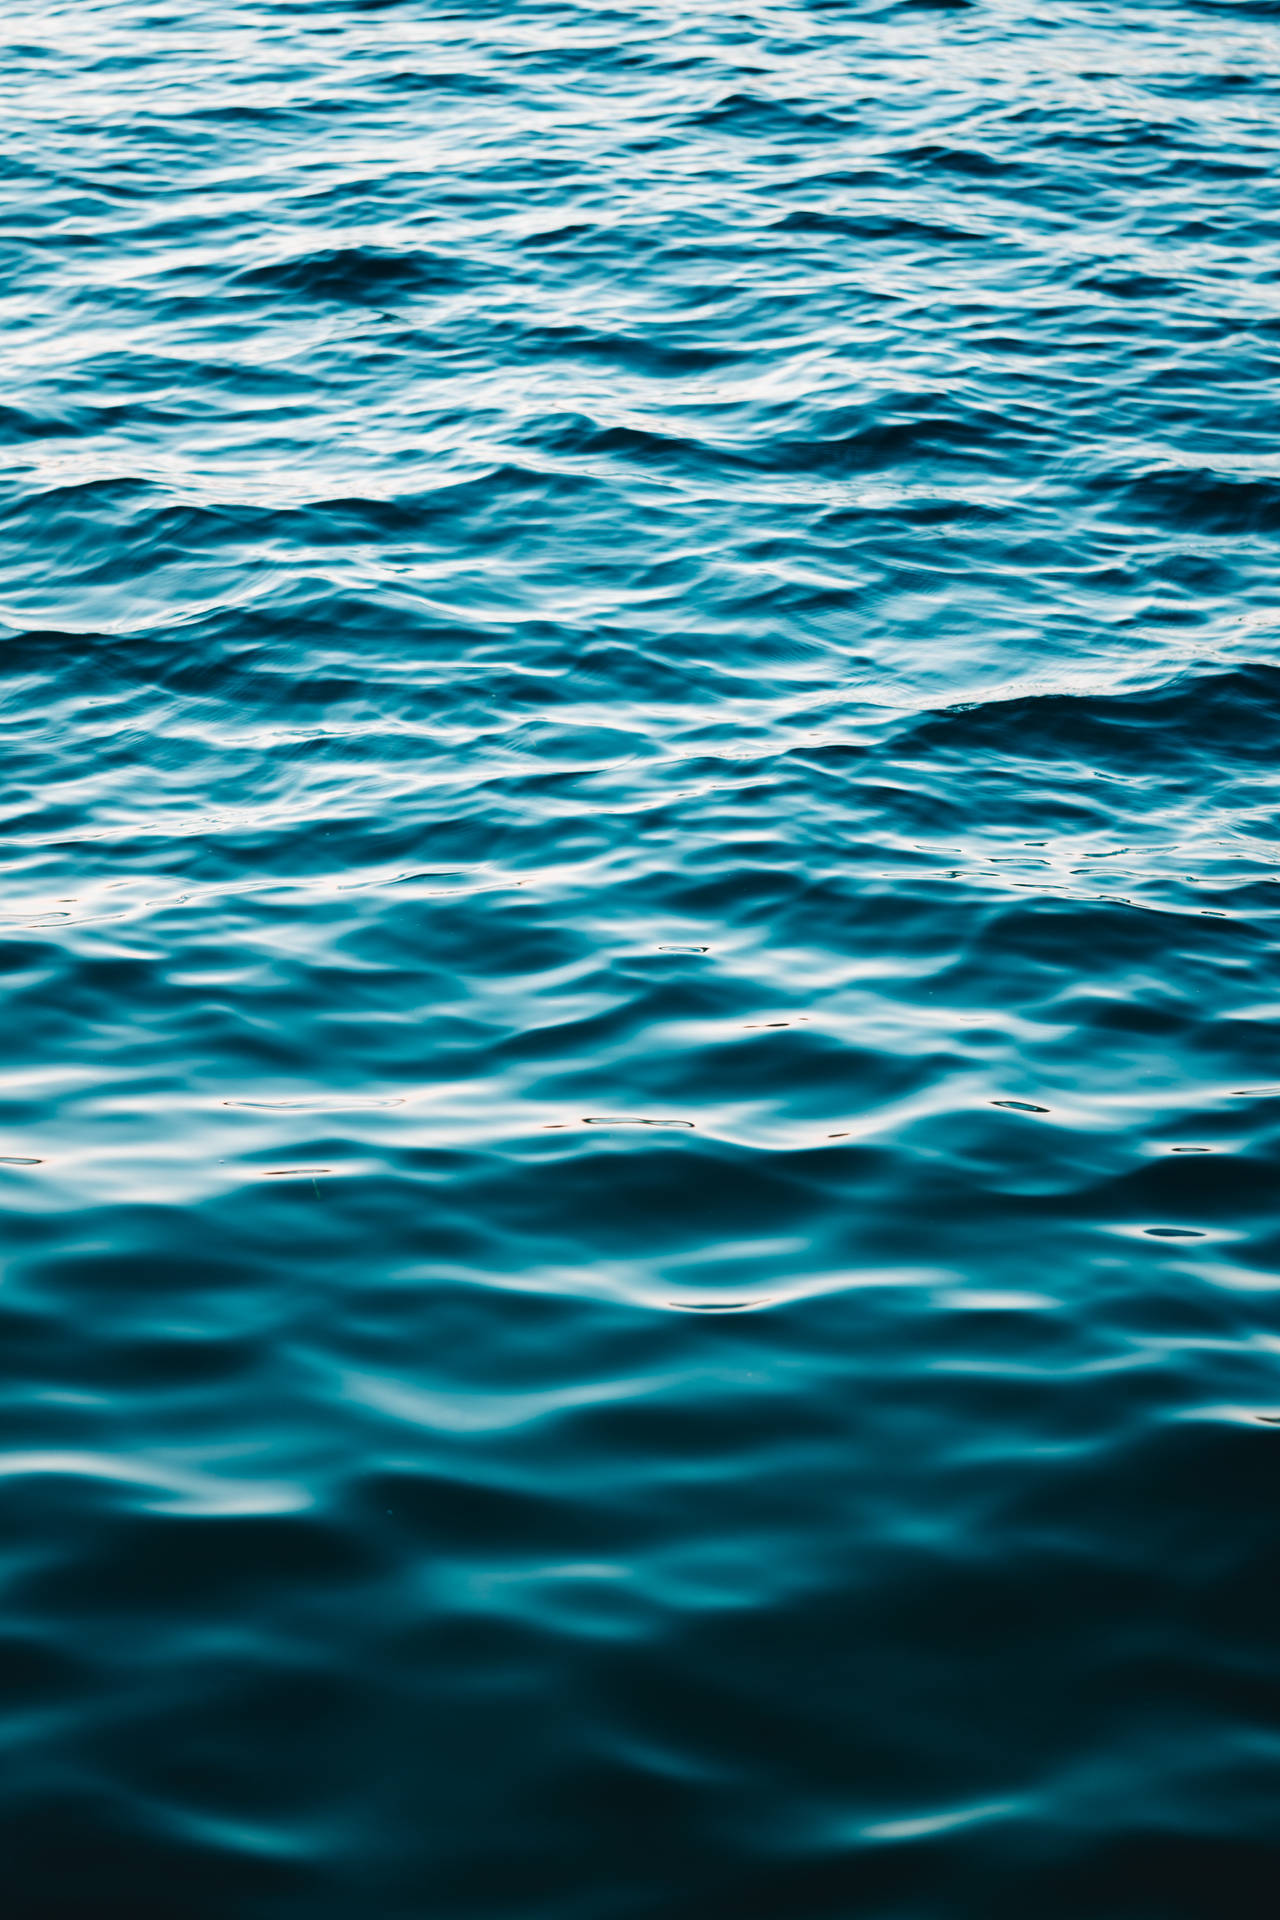 Solid Dark Blue Sea Water Surface